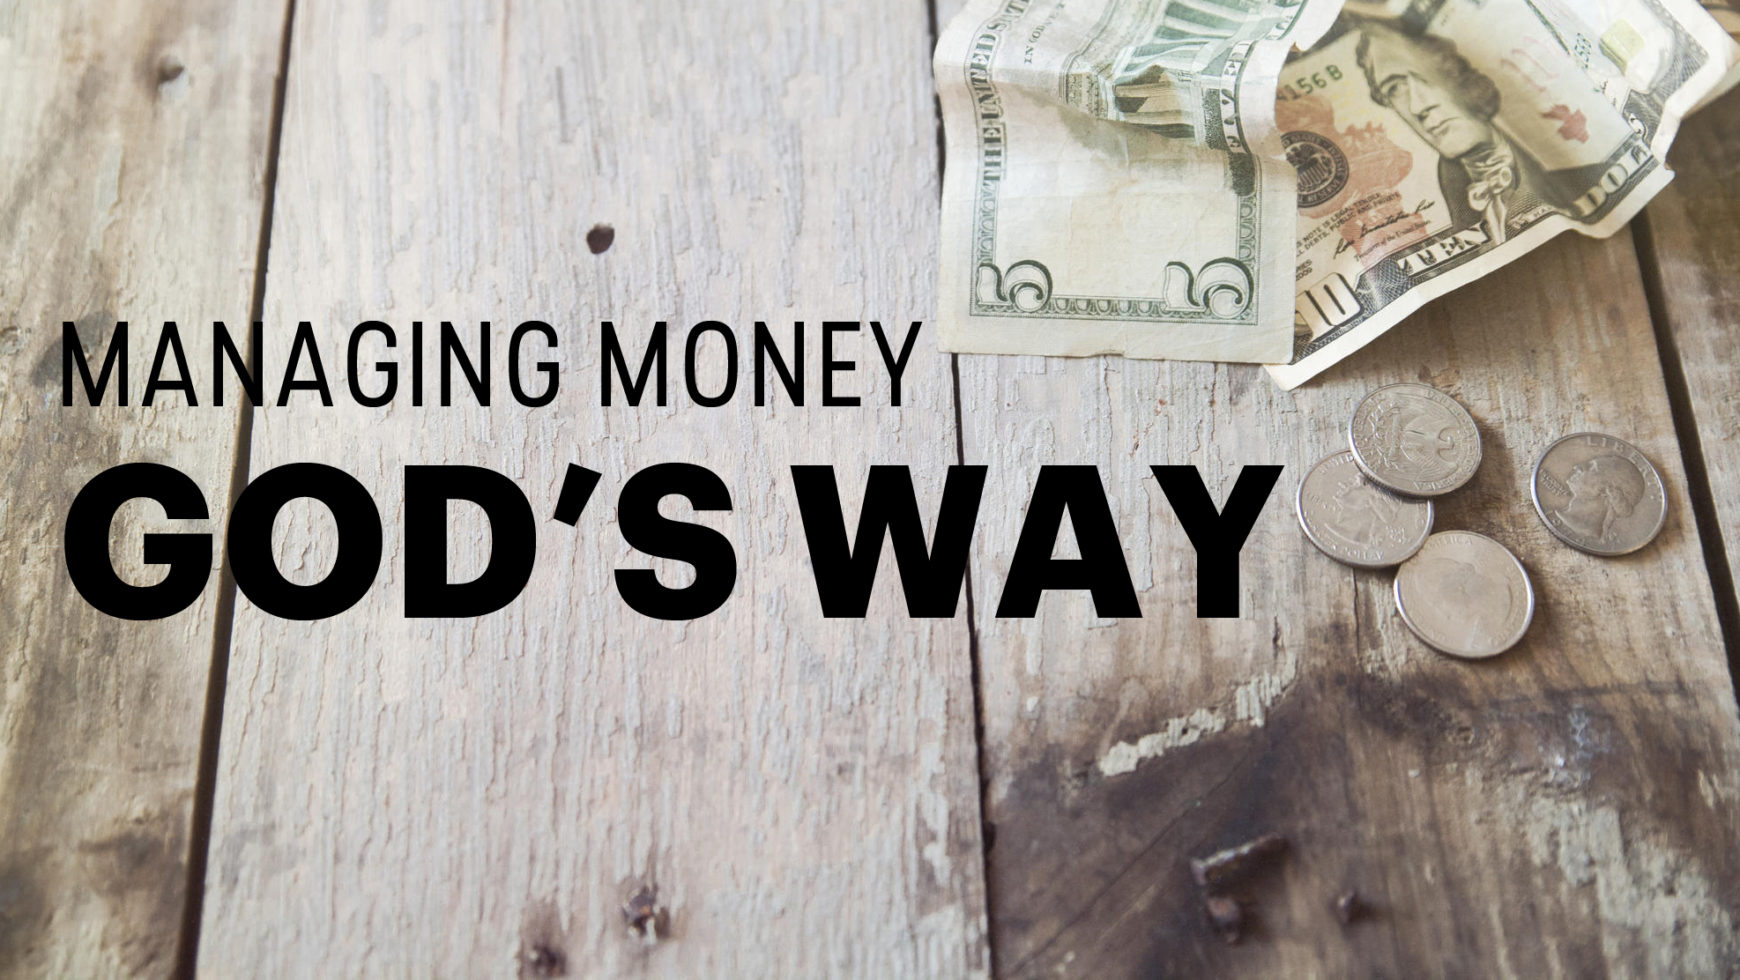 MANAGING MONEY GOD’S WAY